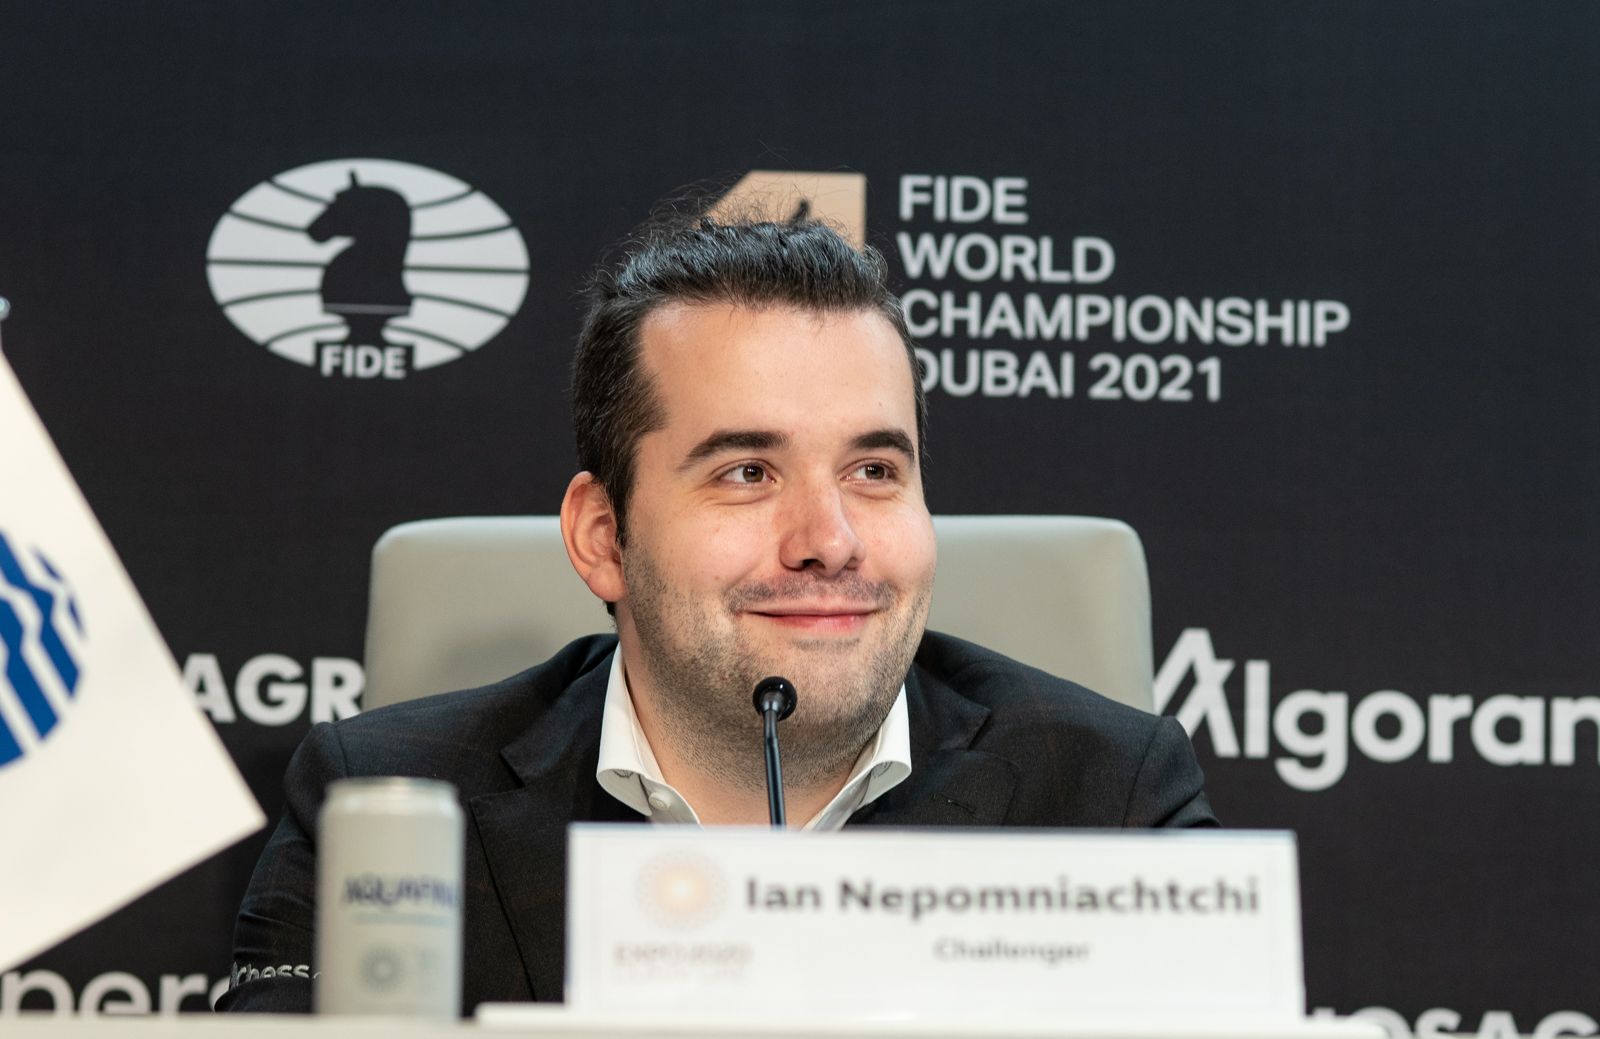 FIDE World Chess Championship, Carlsen vs. Nepomniachtchi